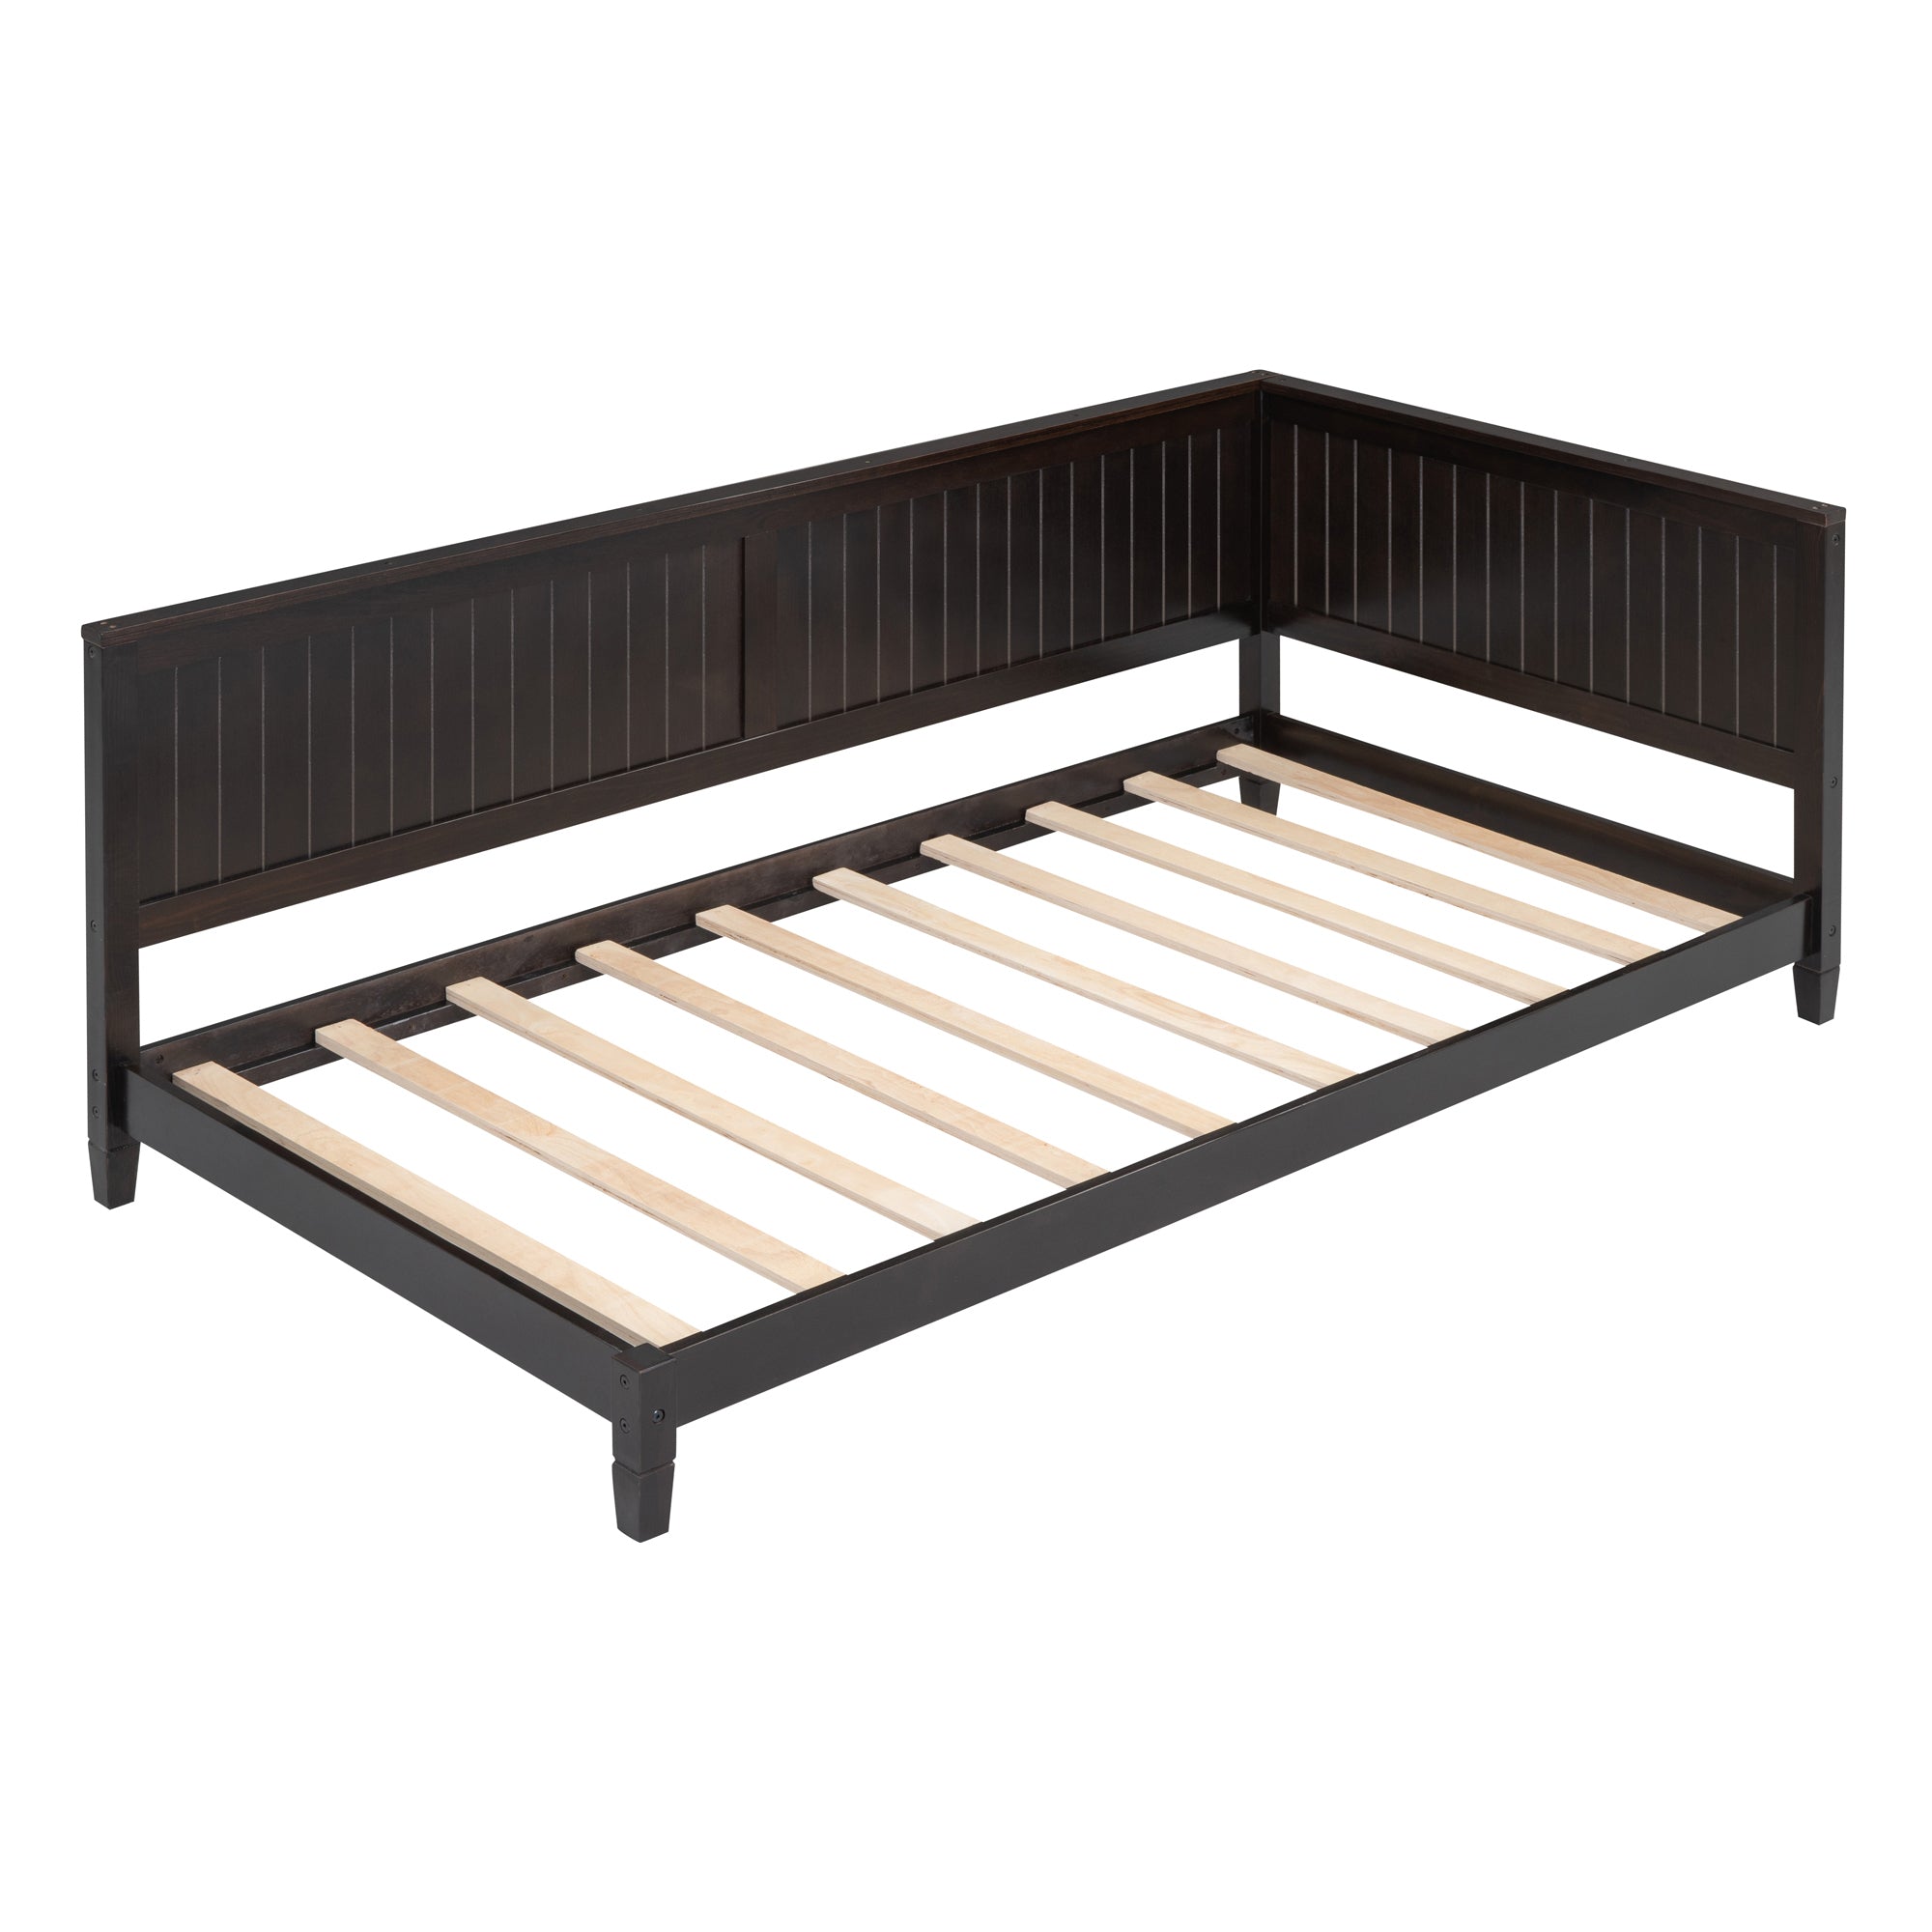 Twin Size Wood Daybed Sofa Bed, Espresso espresso-solid wood+mdf